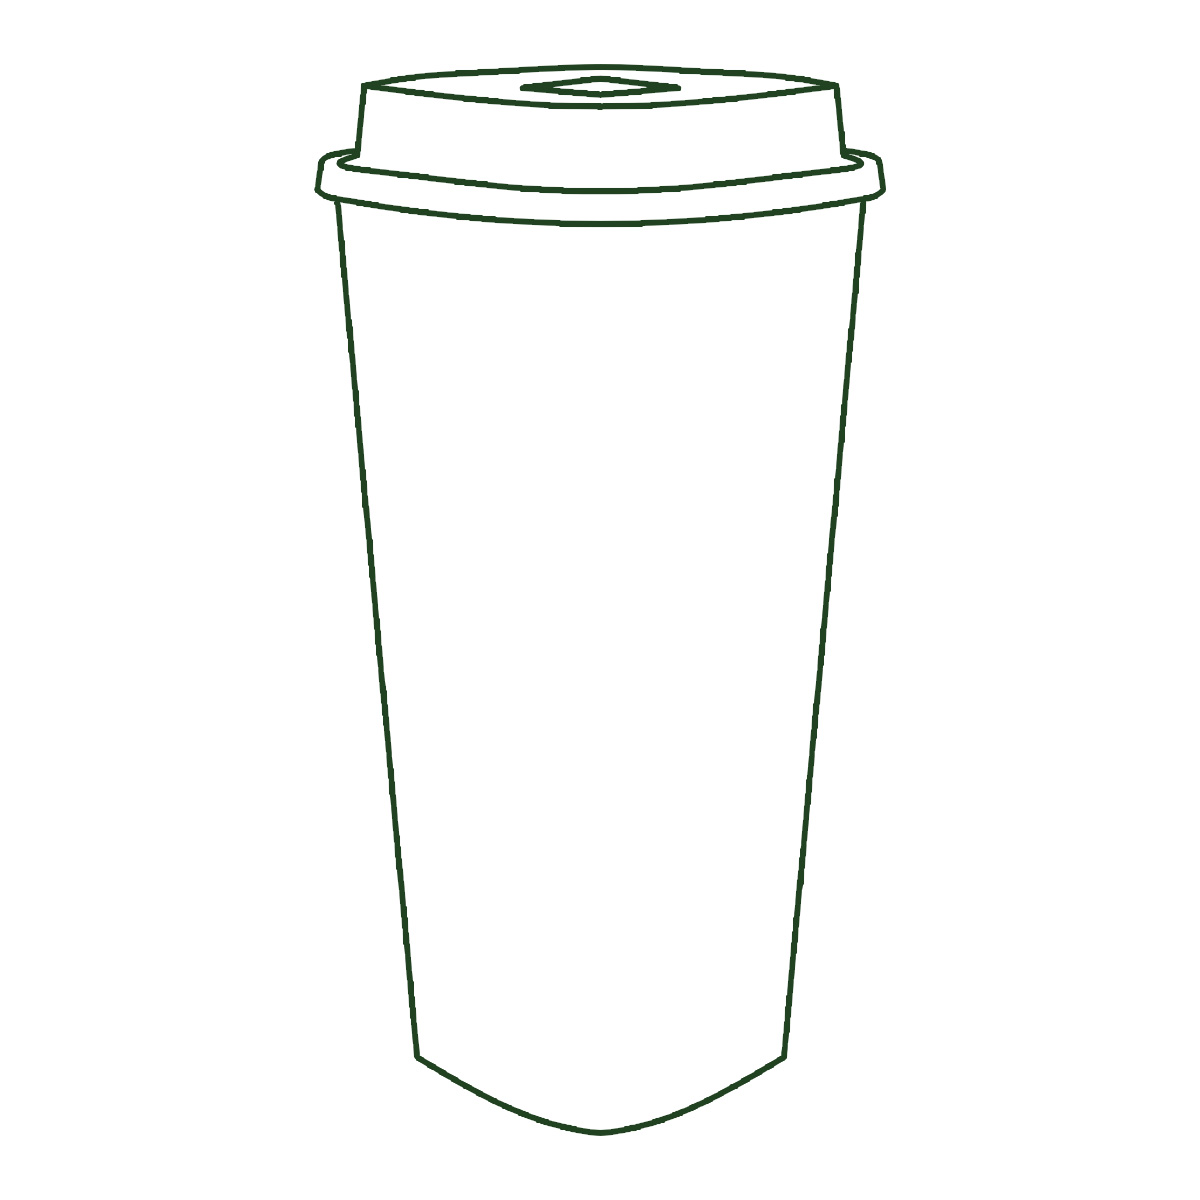 Plastic Cup